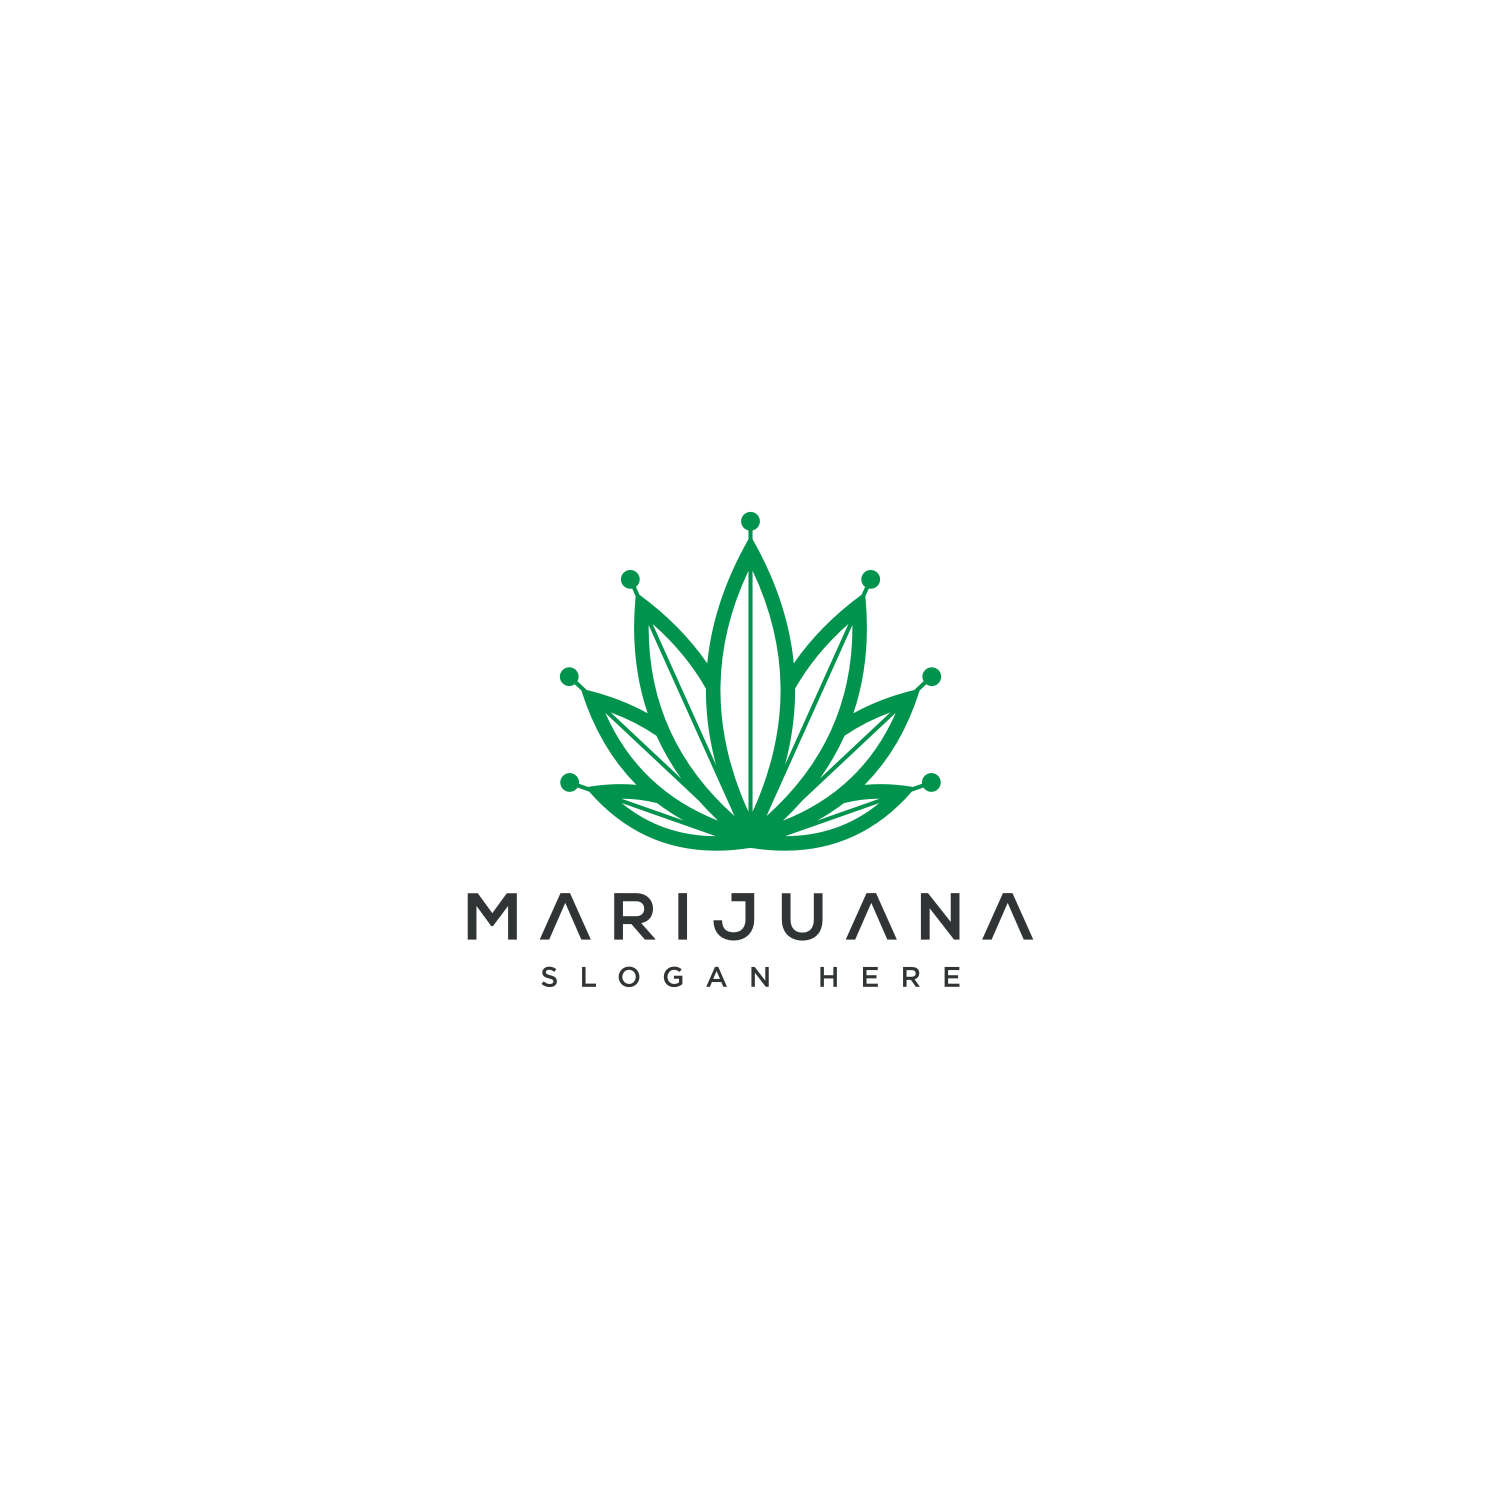 Cannabis Marijuana Leaf Logo Vector cover image.